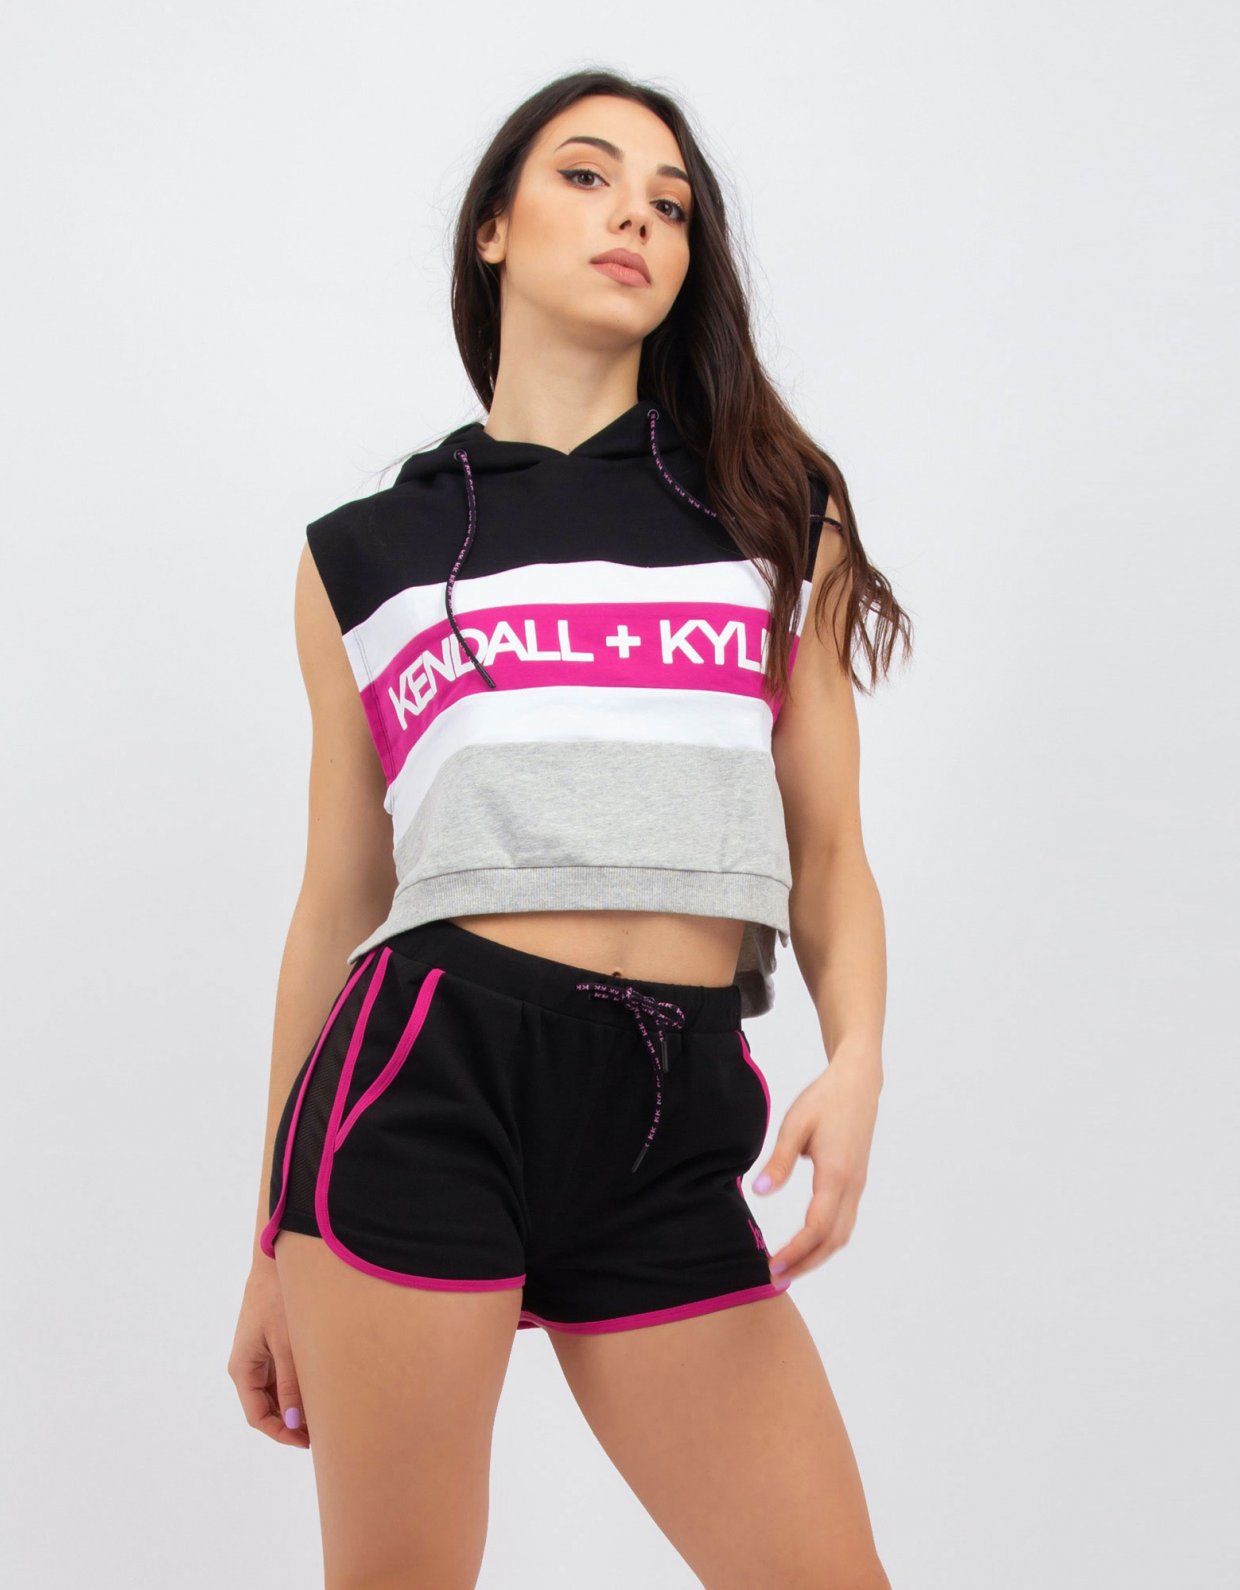 Kendall + Kylie Cropped B/W sweatshirt